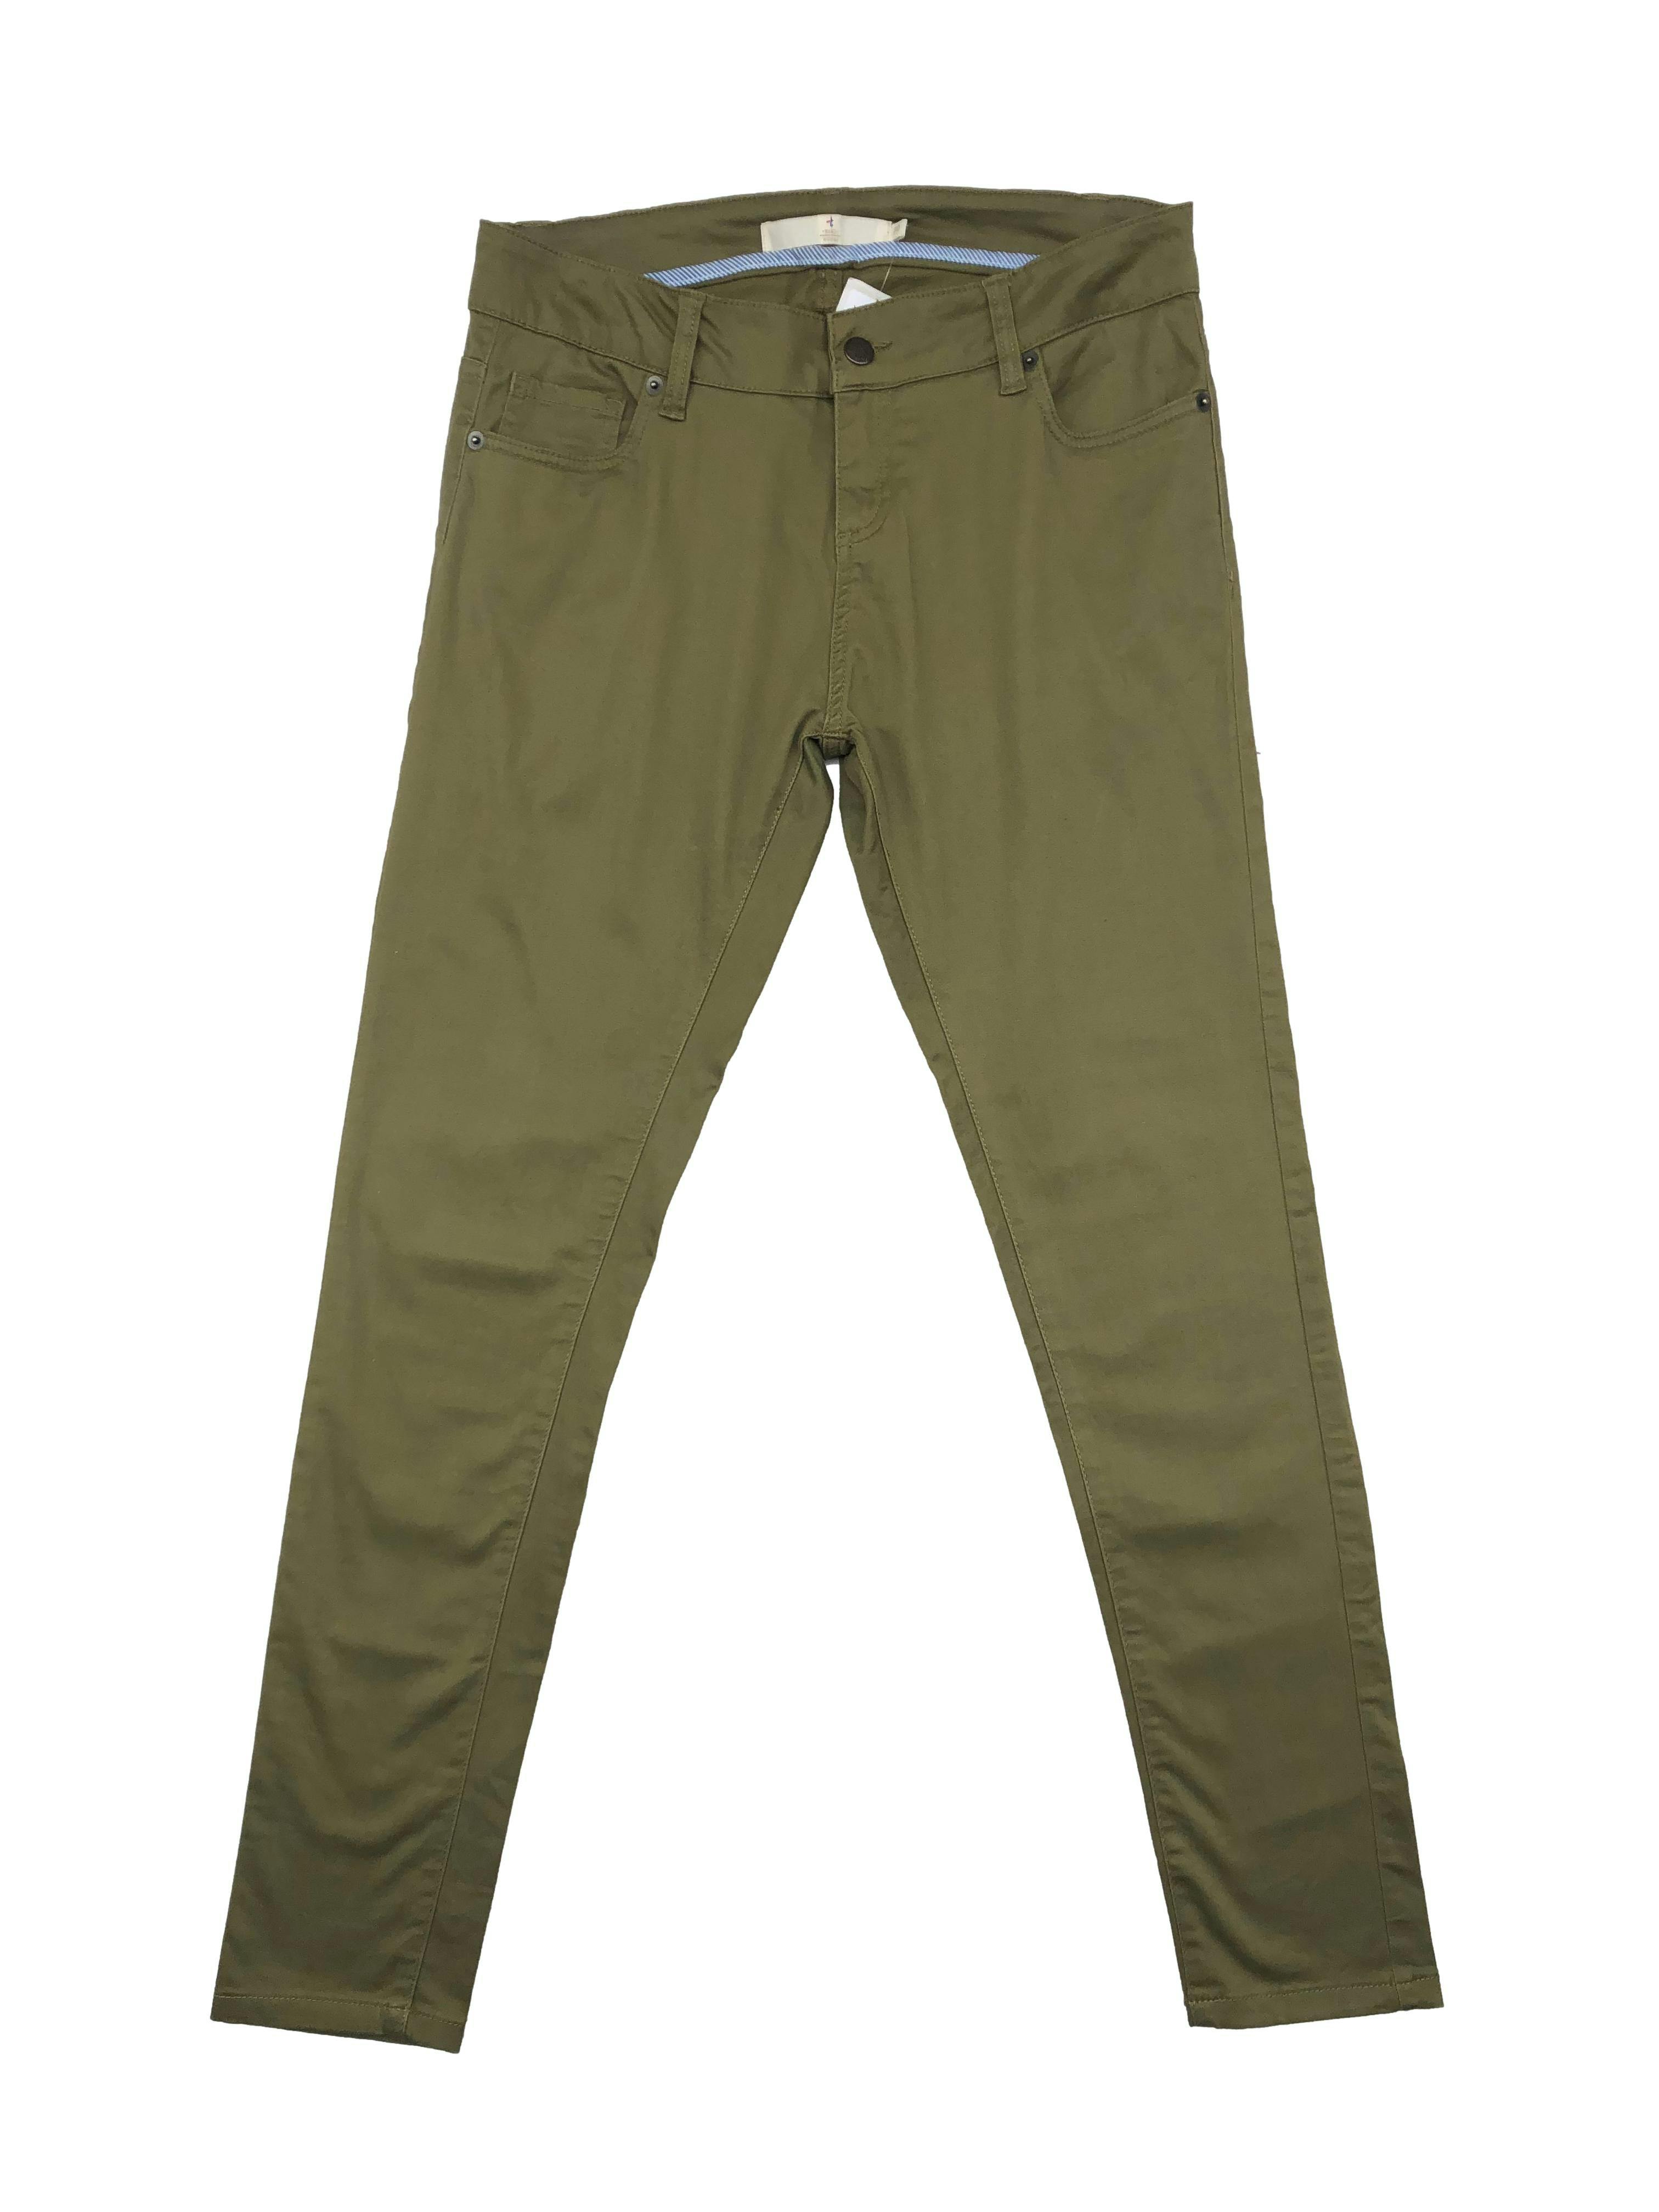 Pantalón drill verde olivo Topitop, corte slim, 5 bolsillos. Cintura 78cm Tiro 24cm Largo 97cm